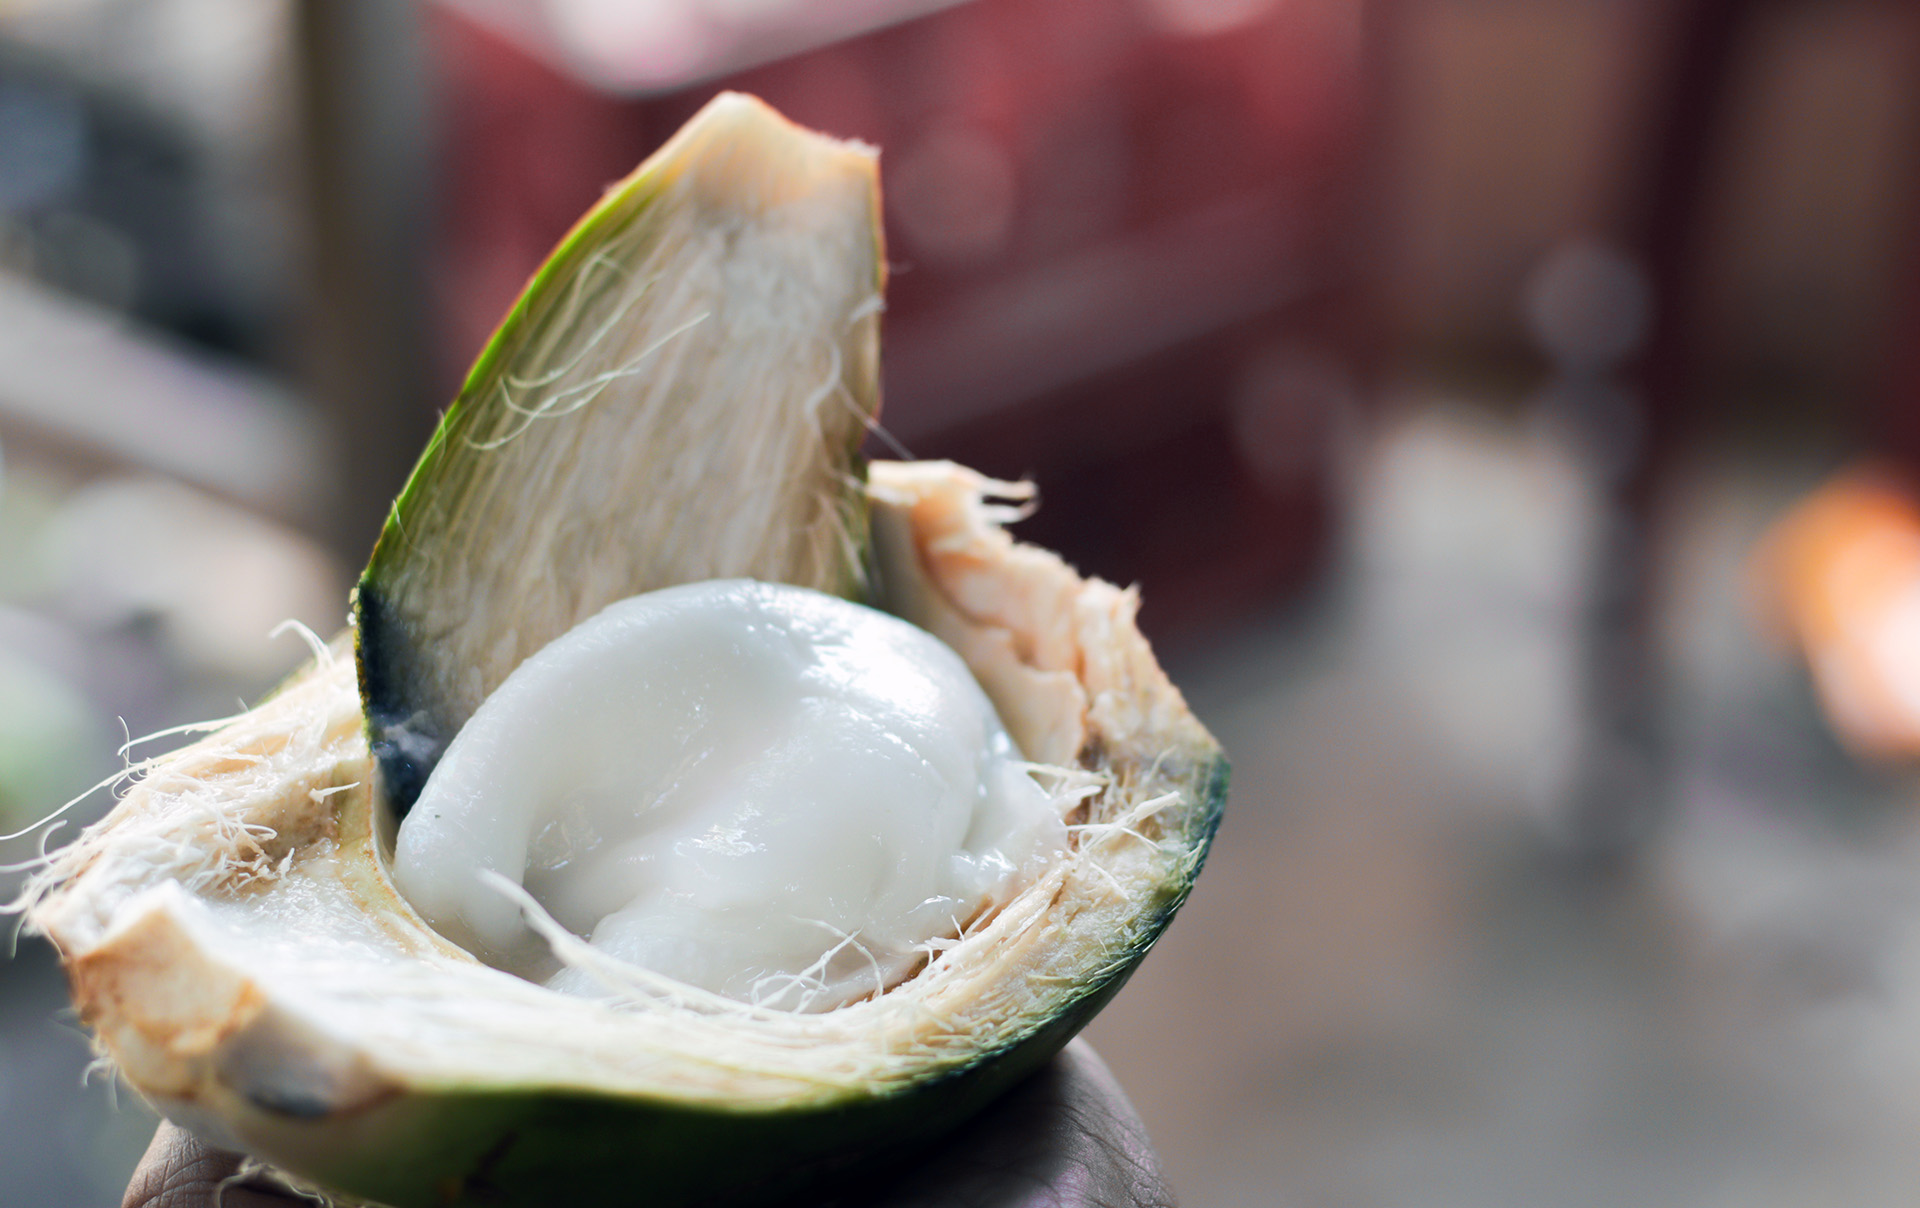 Coconut Malai Benefits